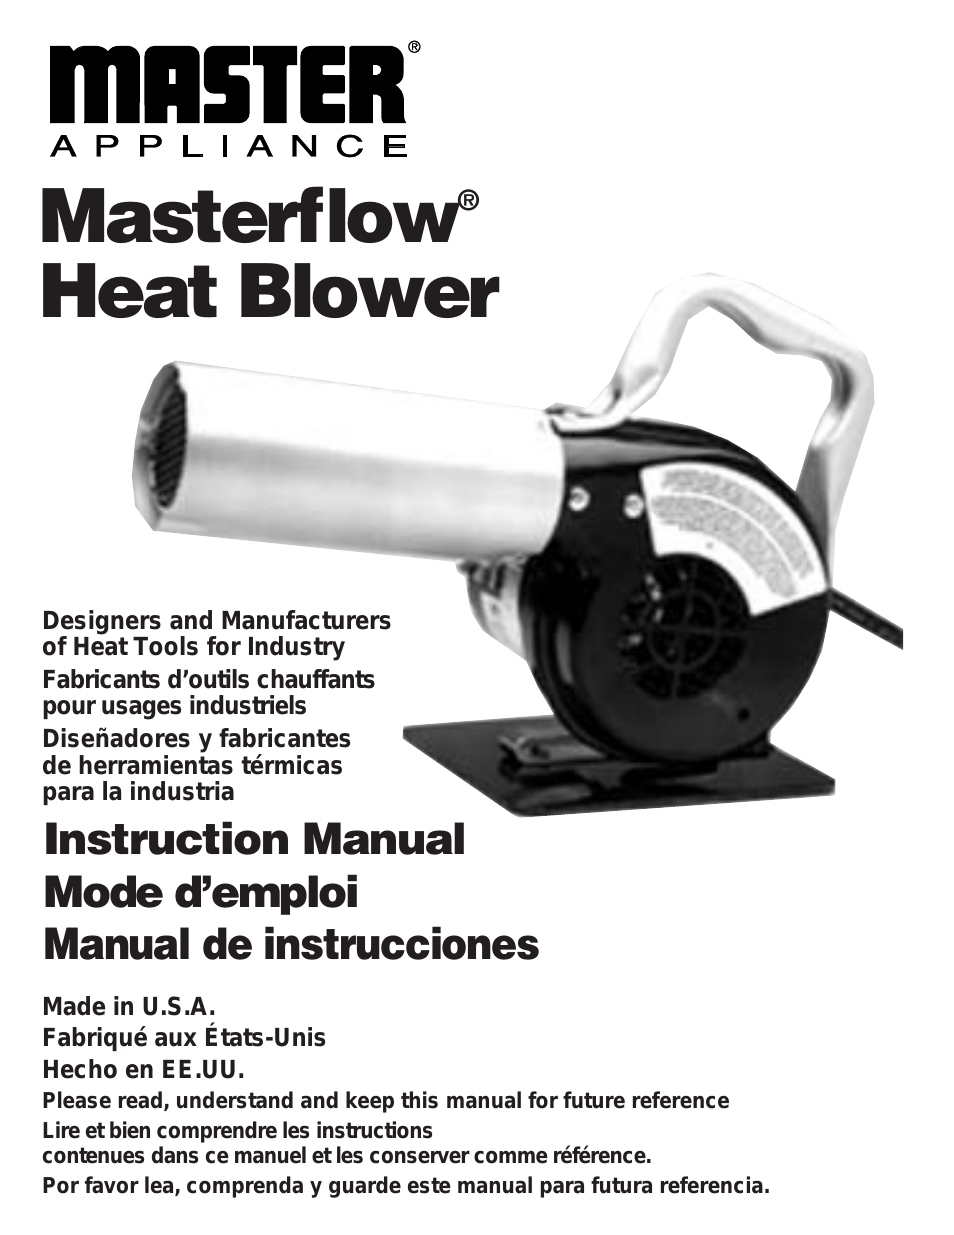 Masterflow Heat Blowers